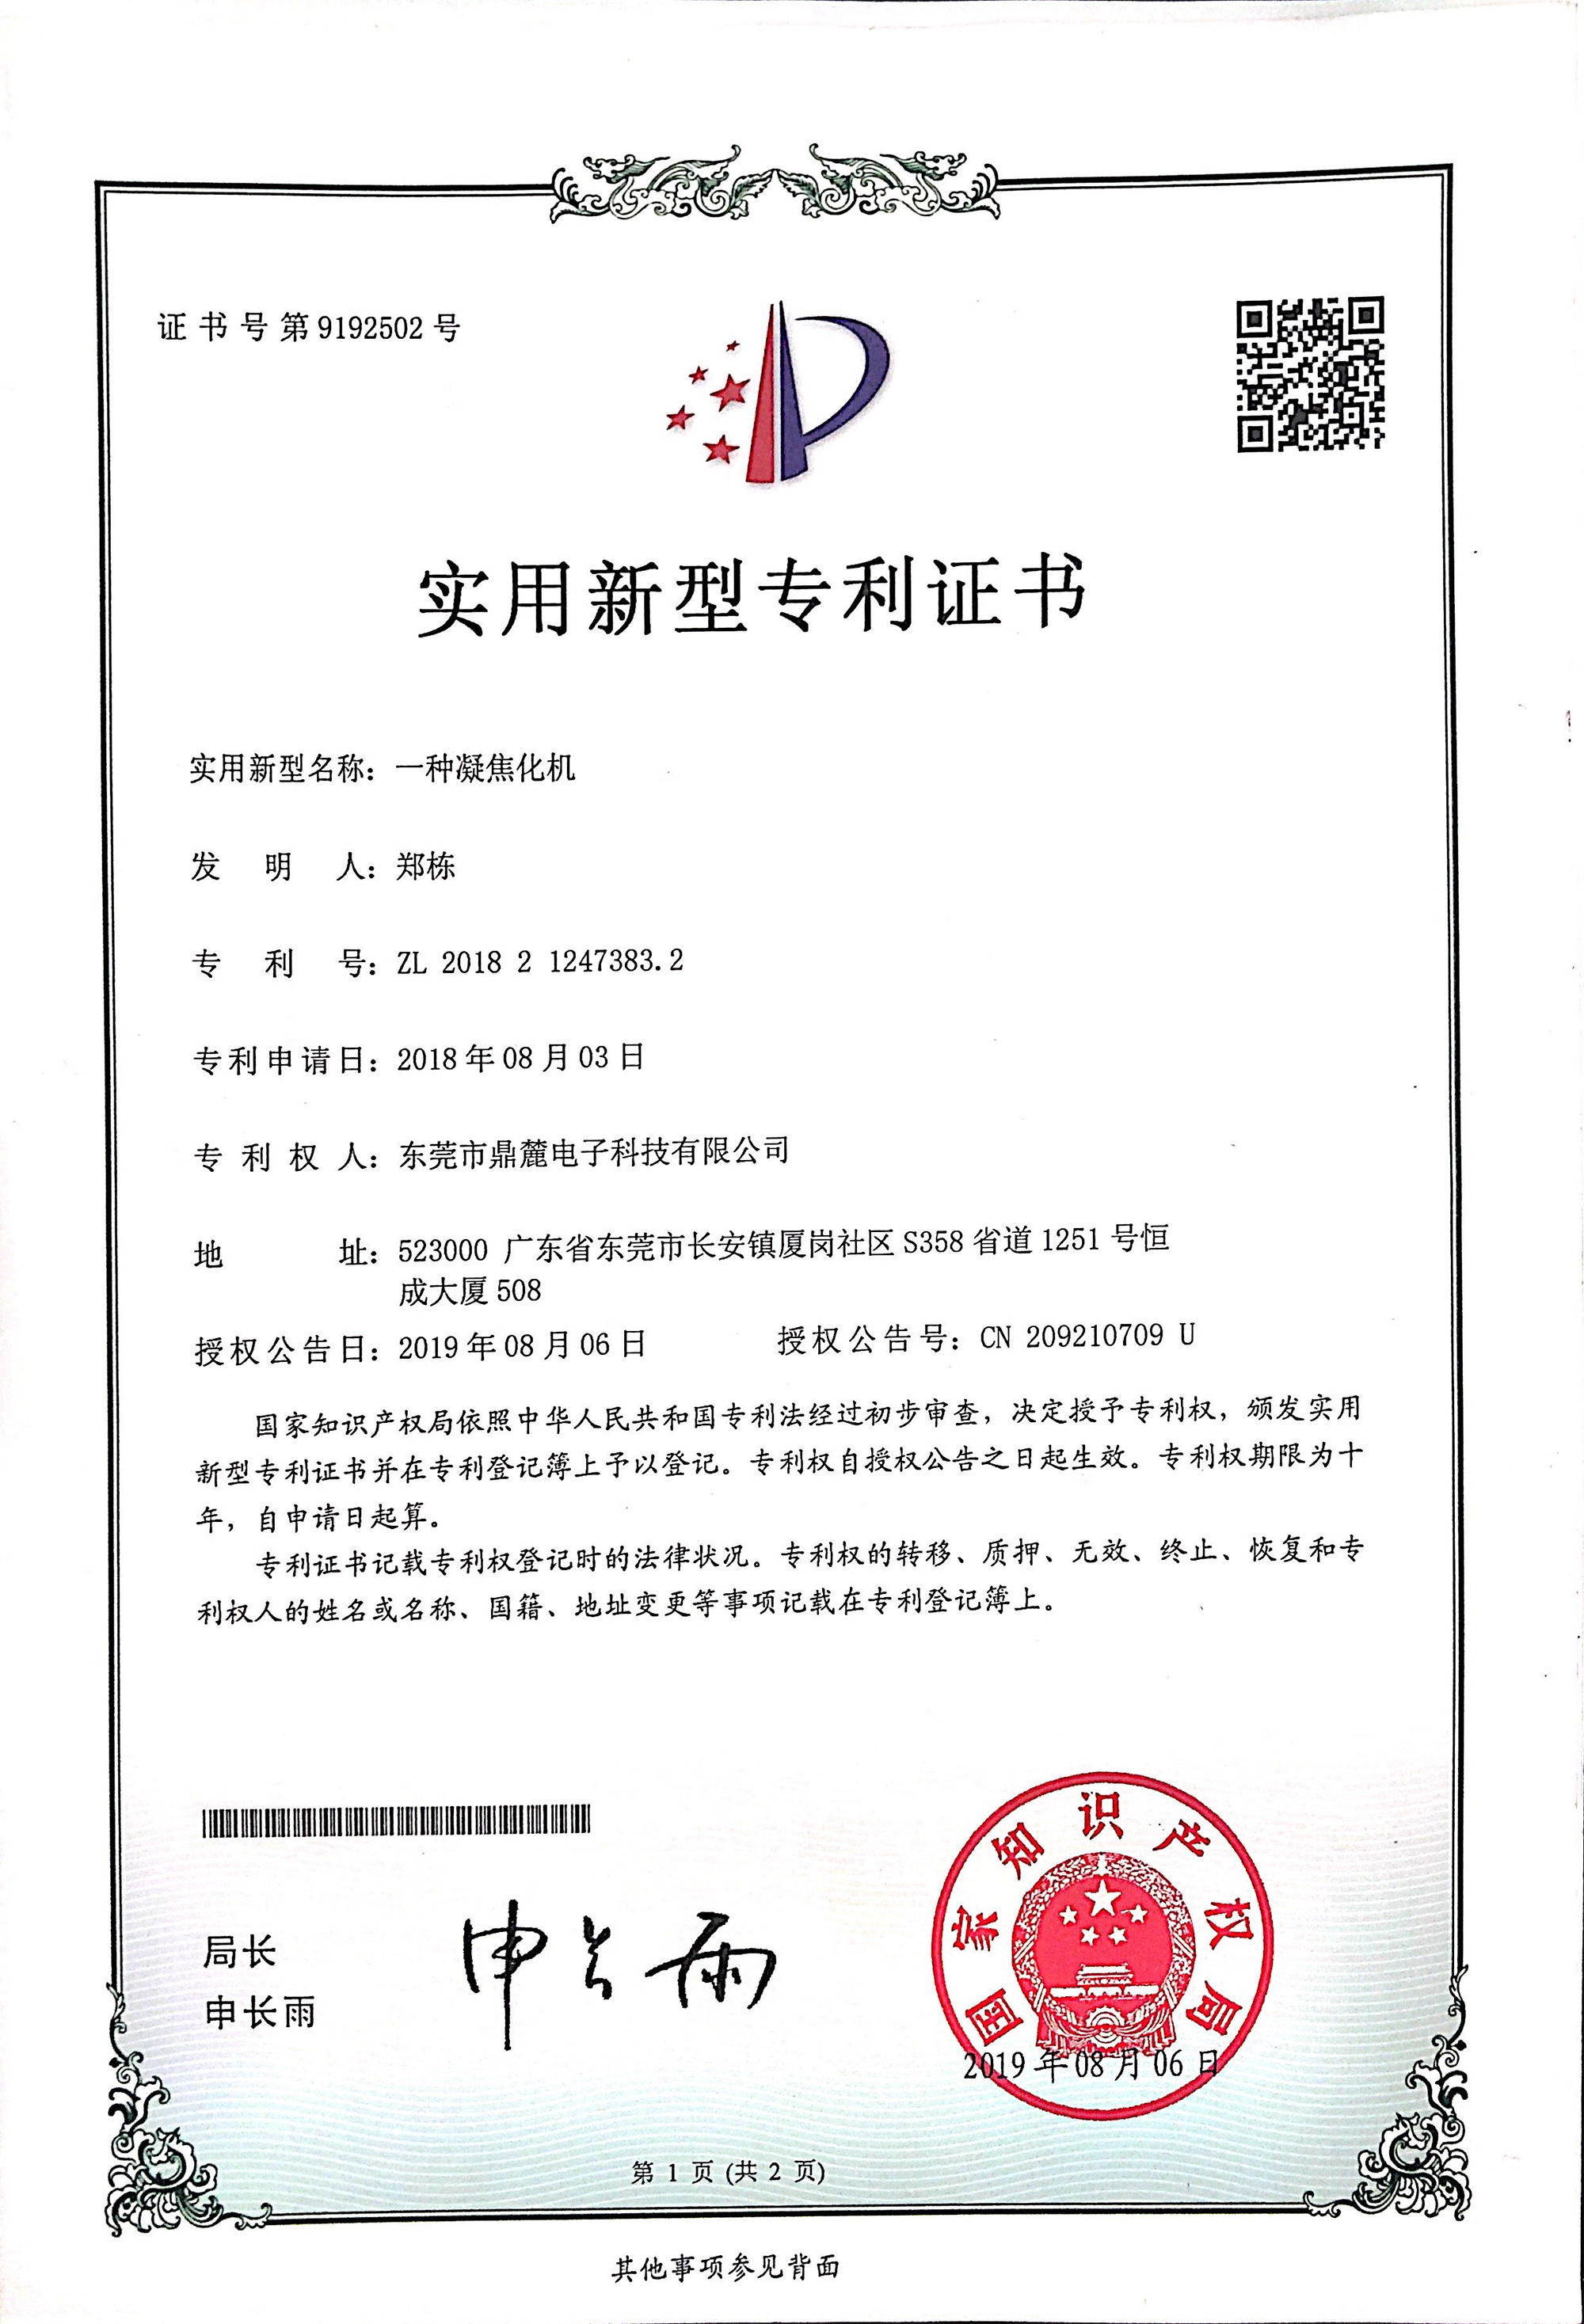 Coking Machine - Utility Model Patent Certificate